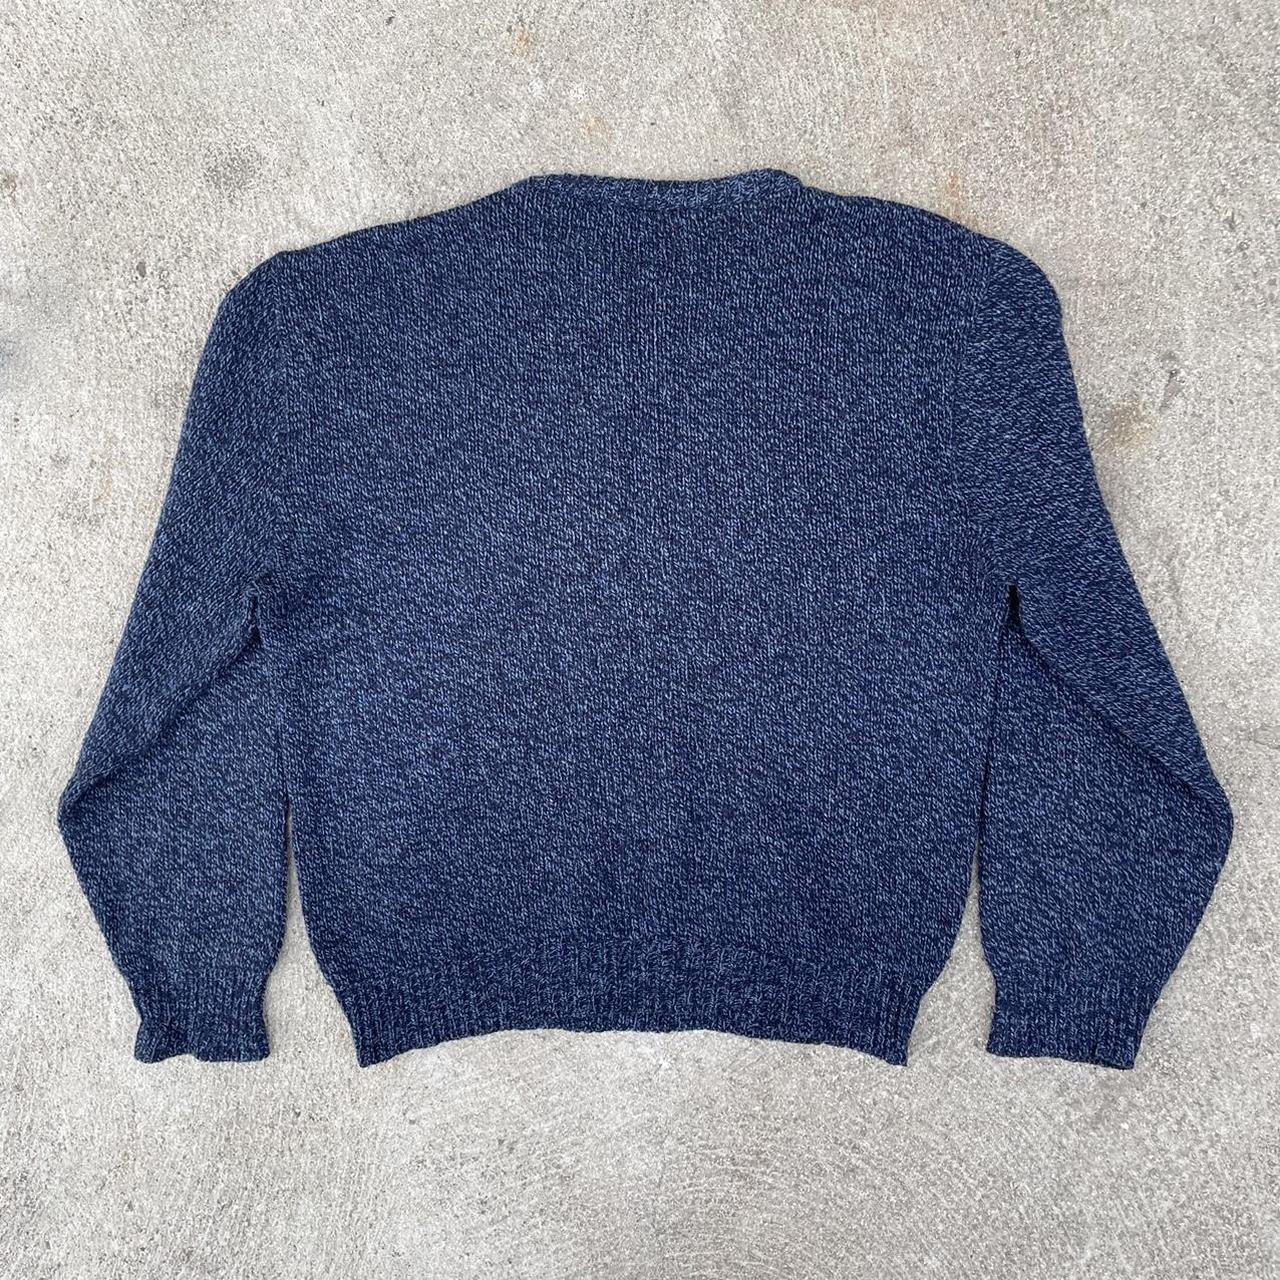 Mens Vintage Wool Knit Pullover Crewneck Sweater... - Depop